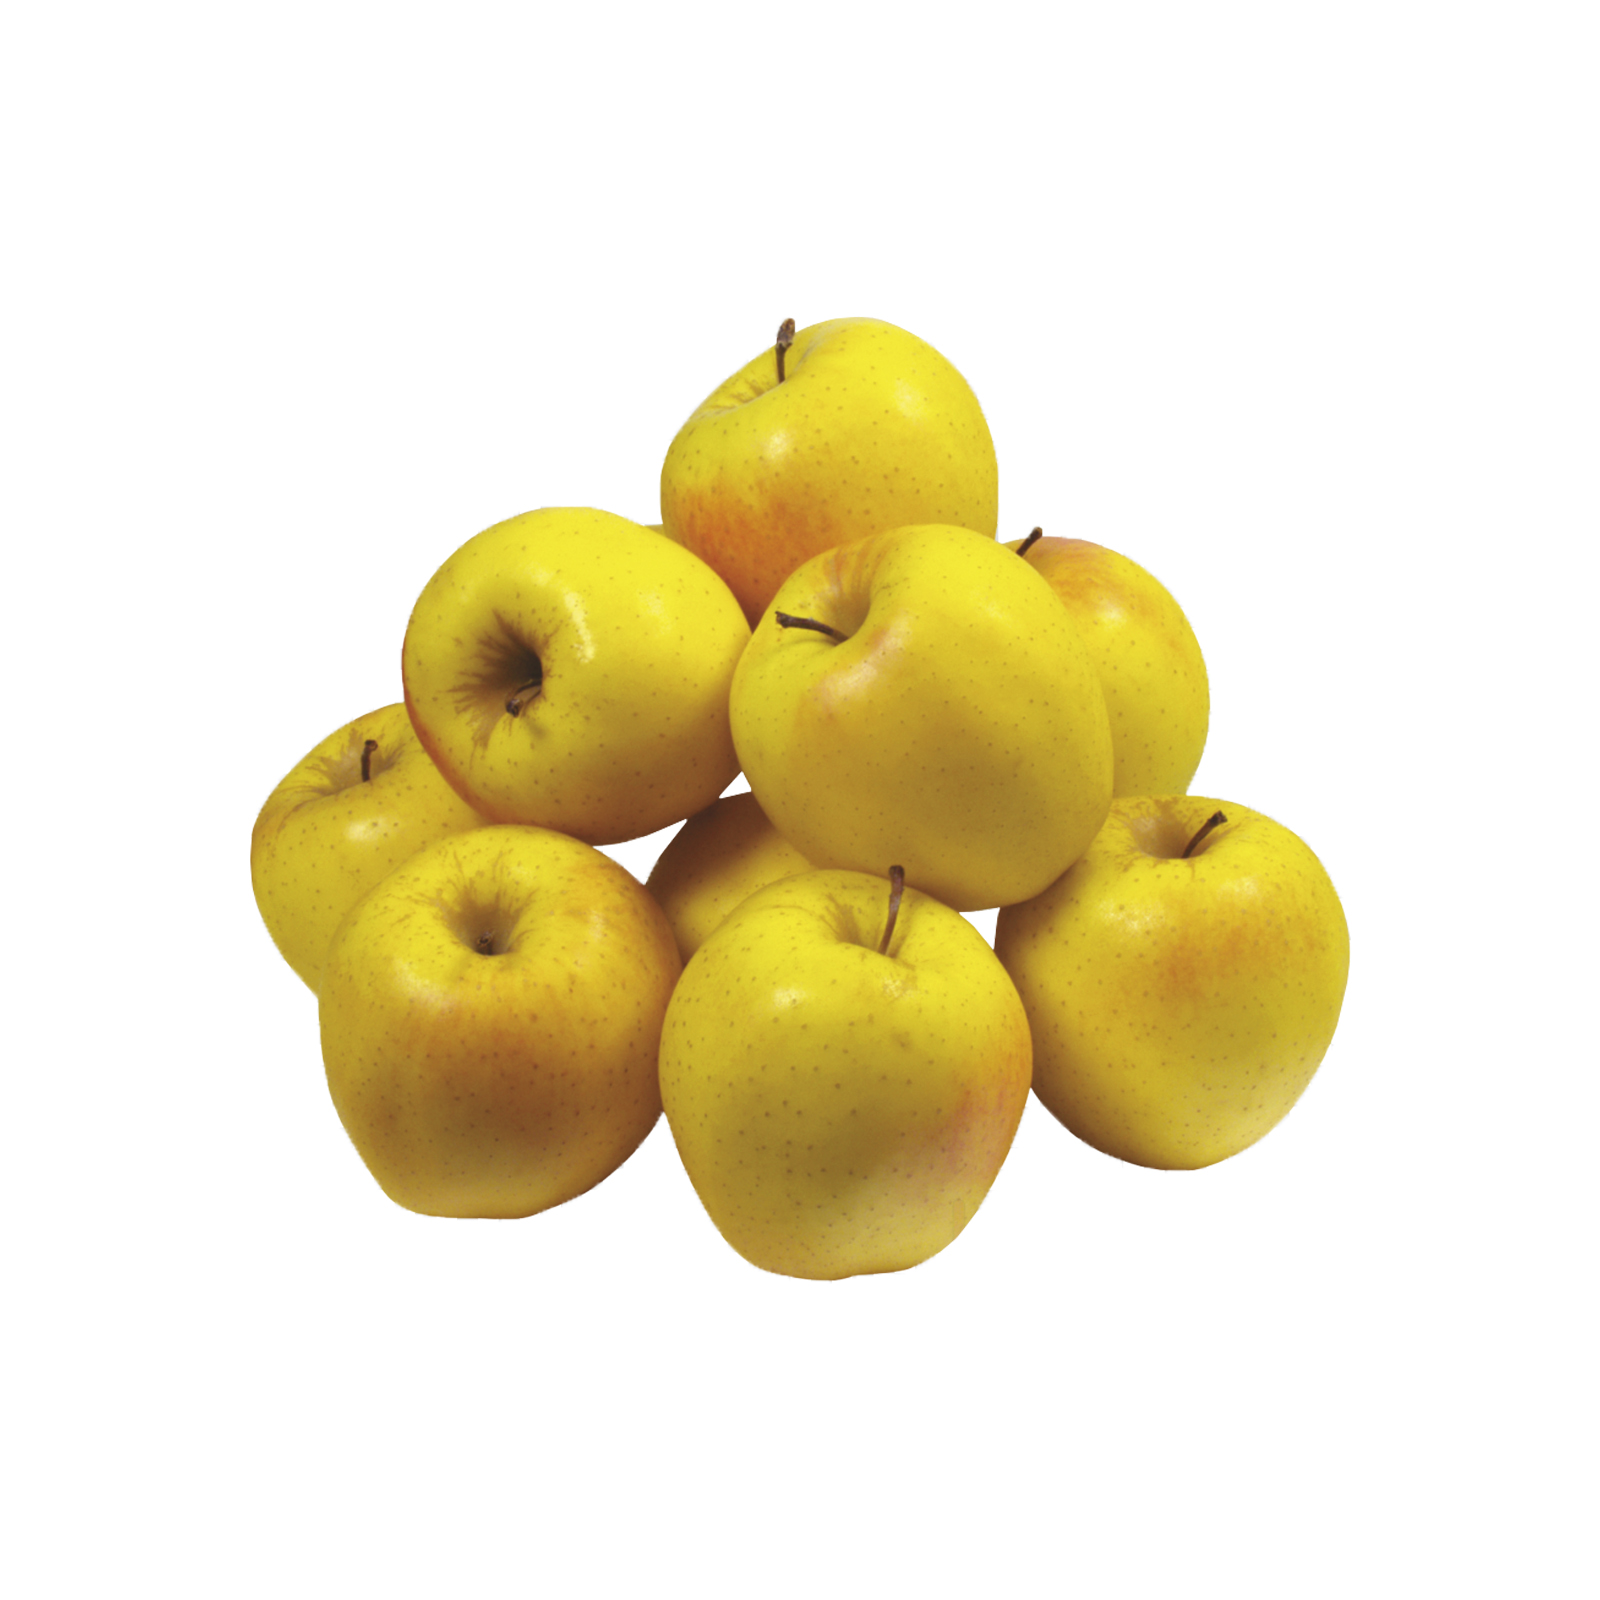 سیب زرد دستچین - 7 کیلوگرم